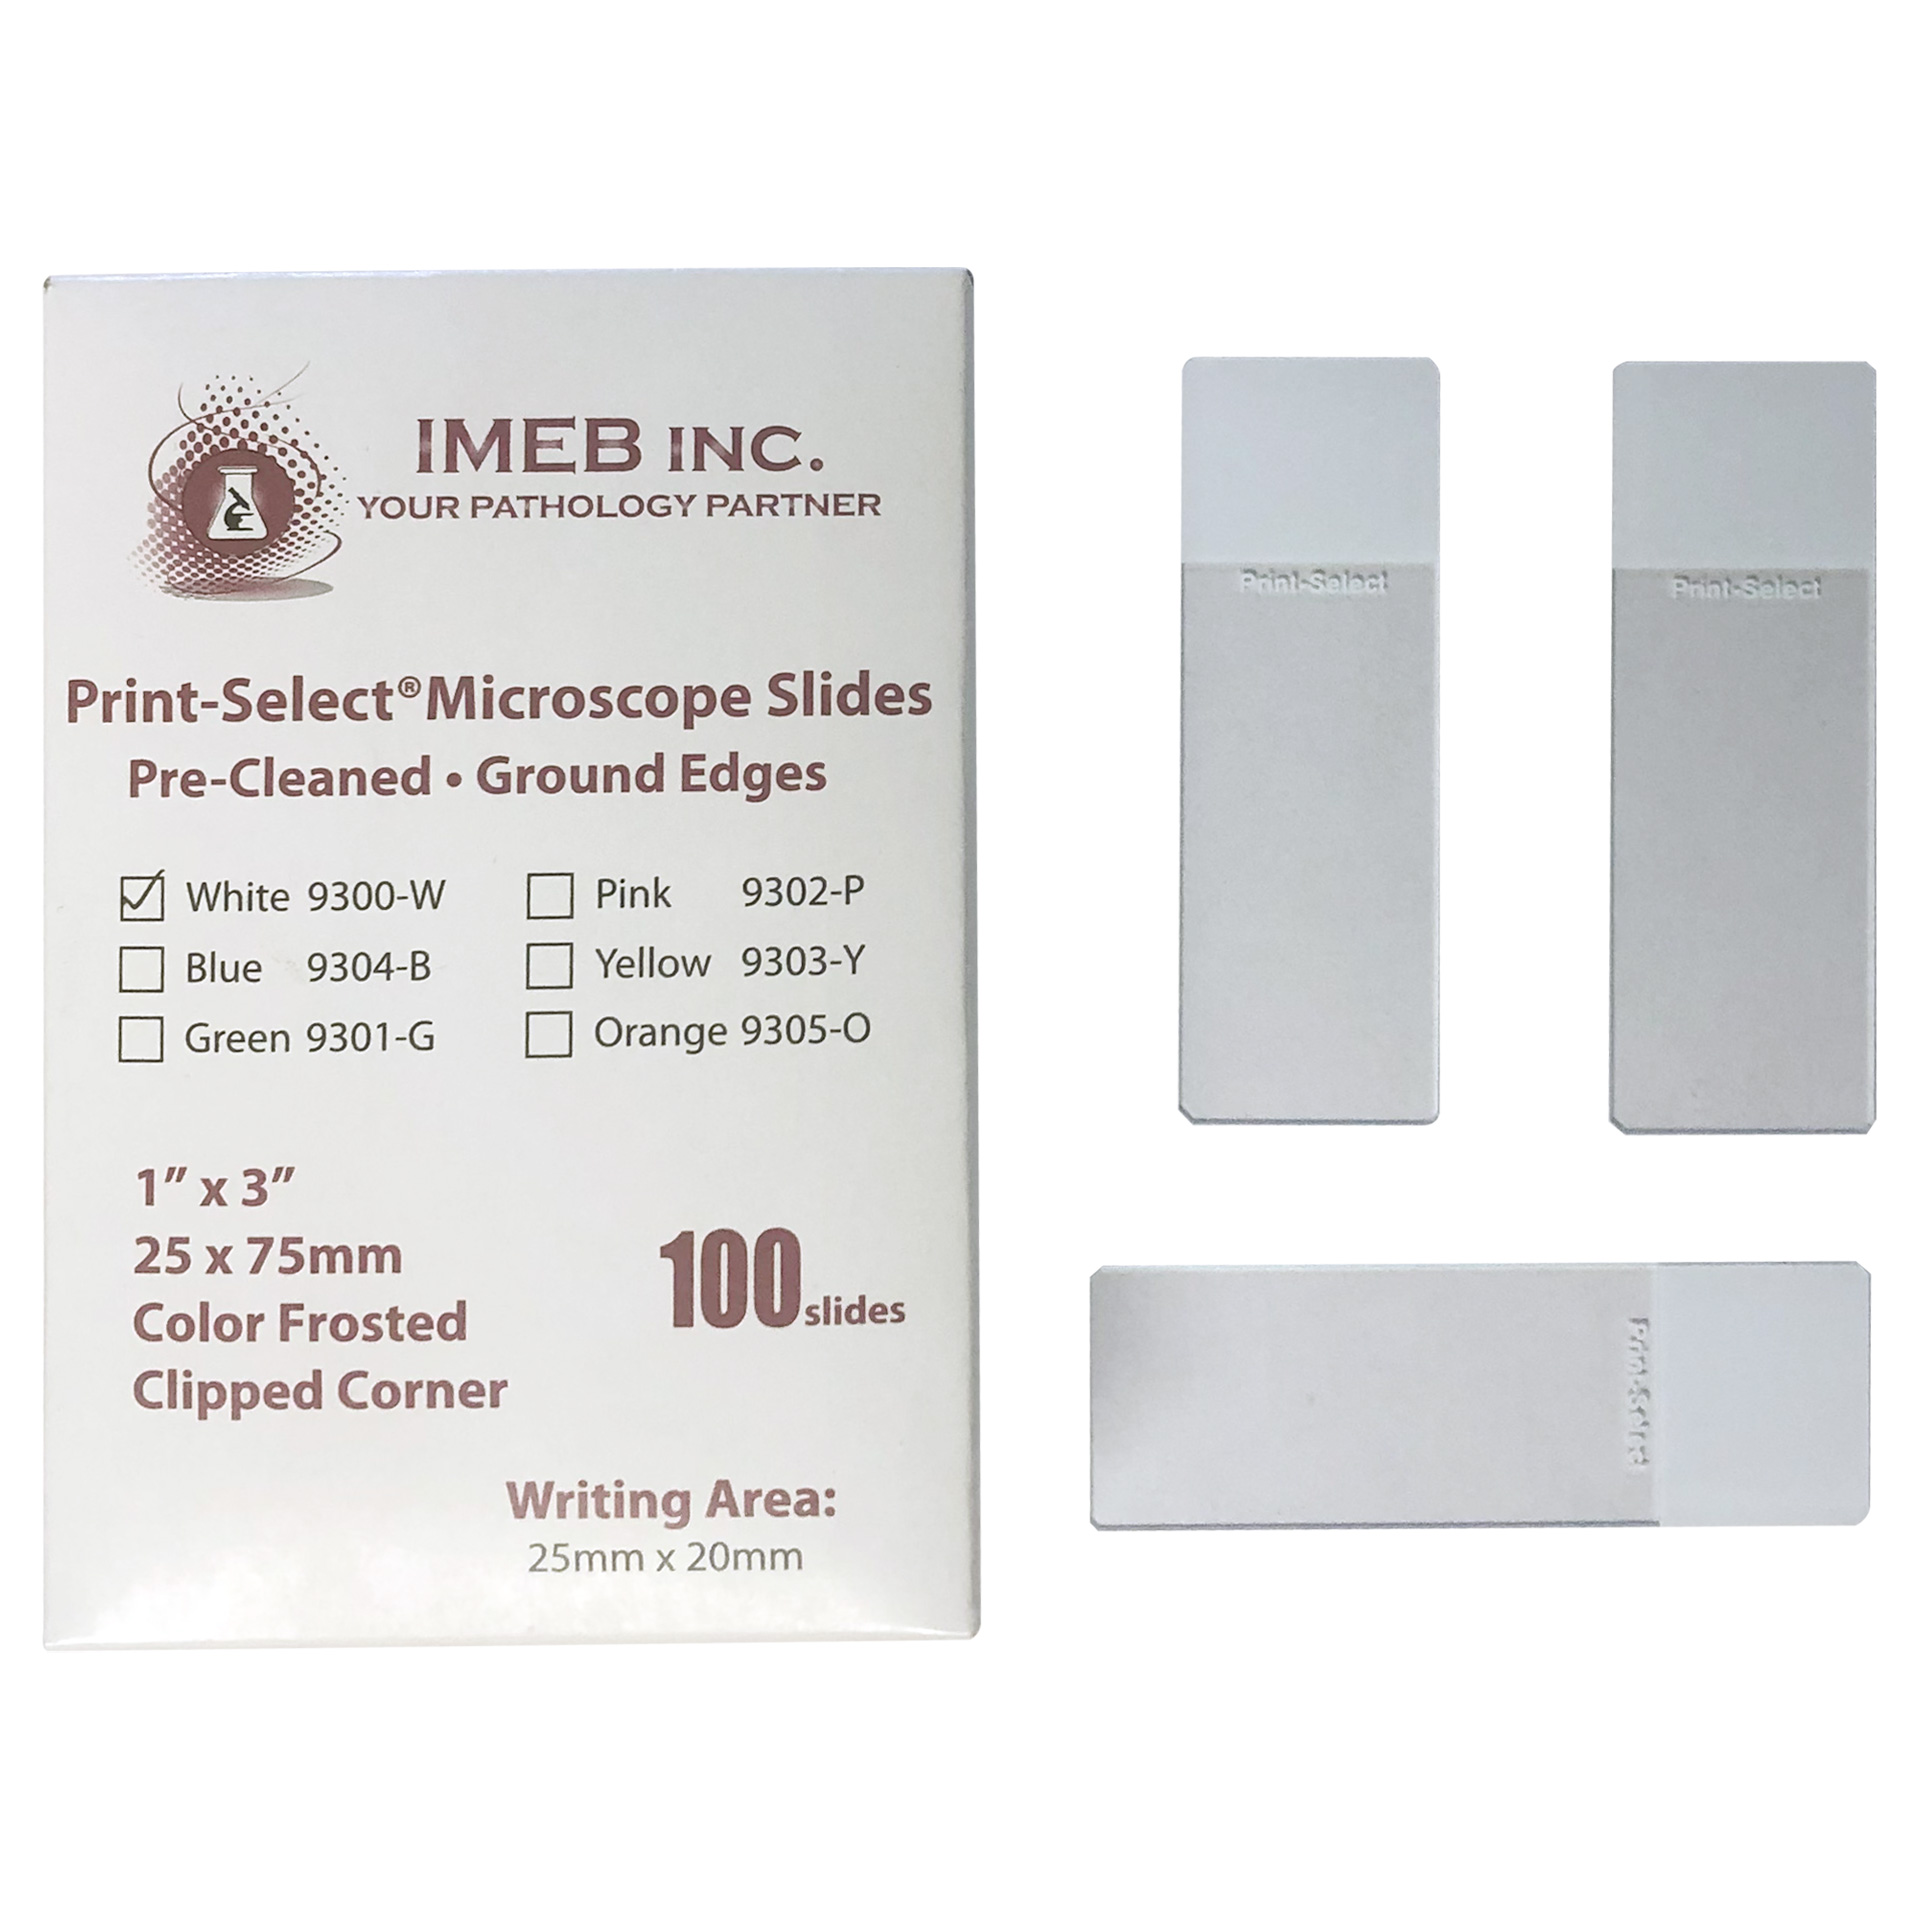 9300-W Print-Select Microscope Slides Top View by IMEB Pathology